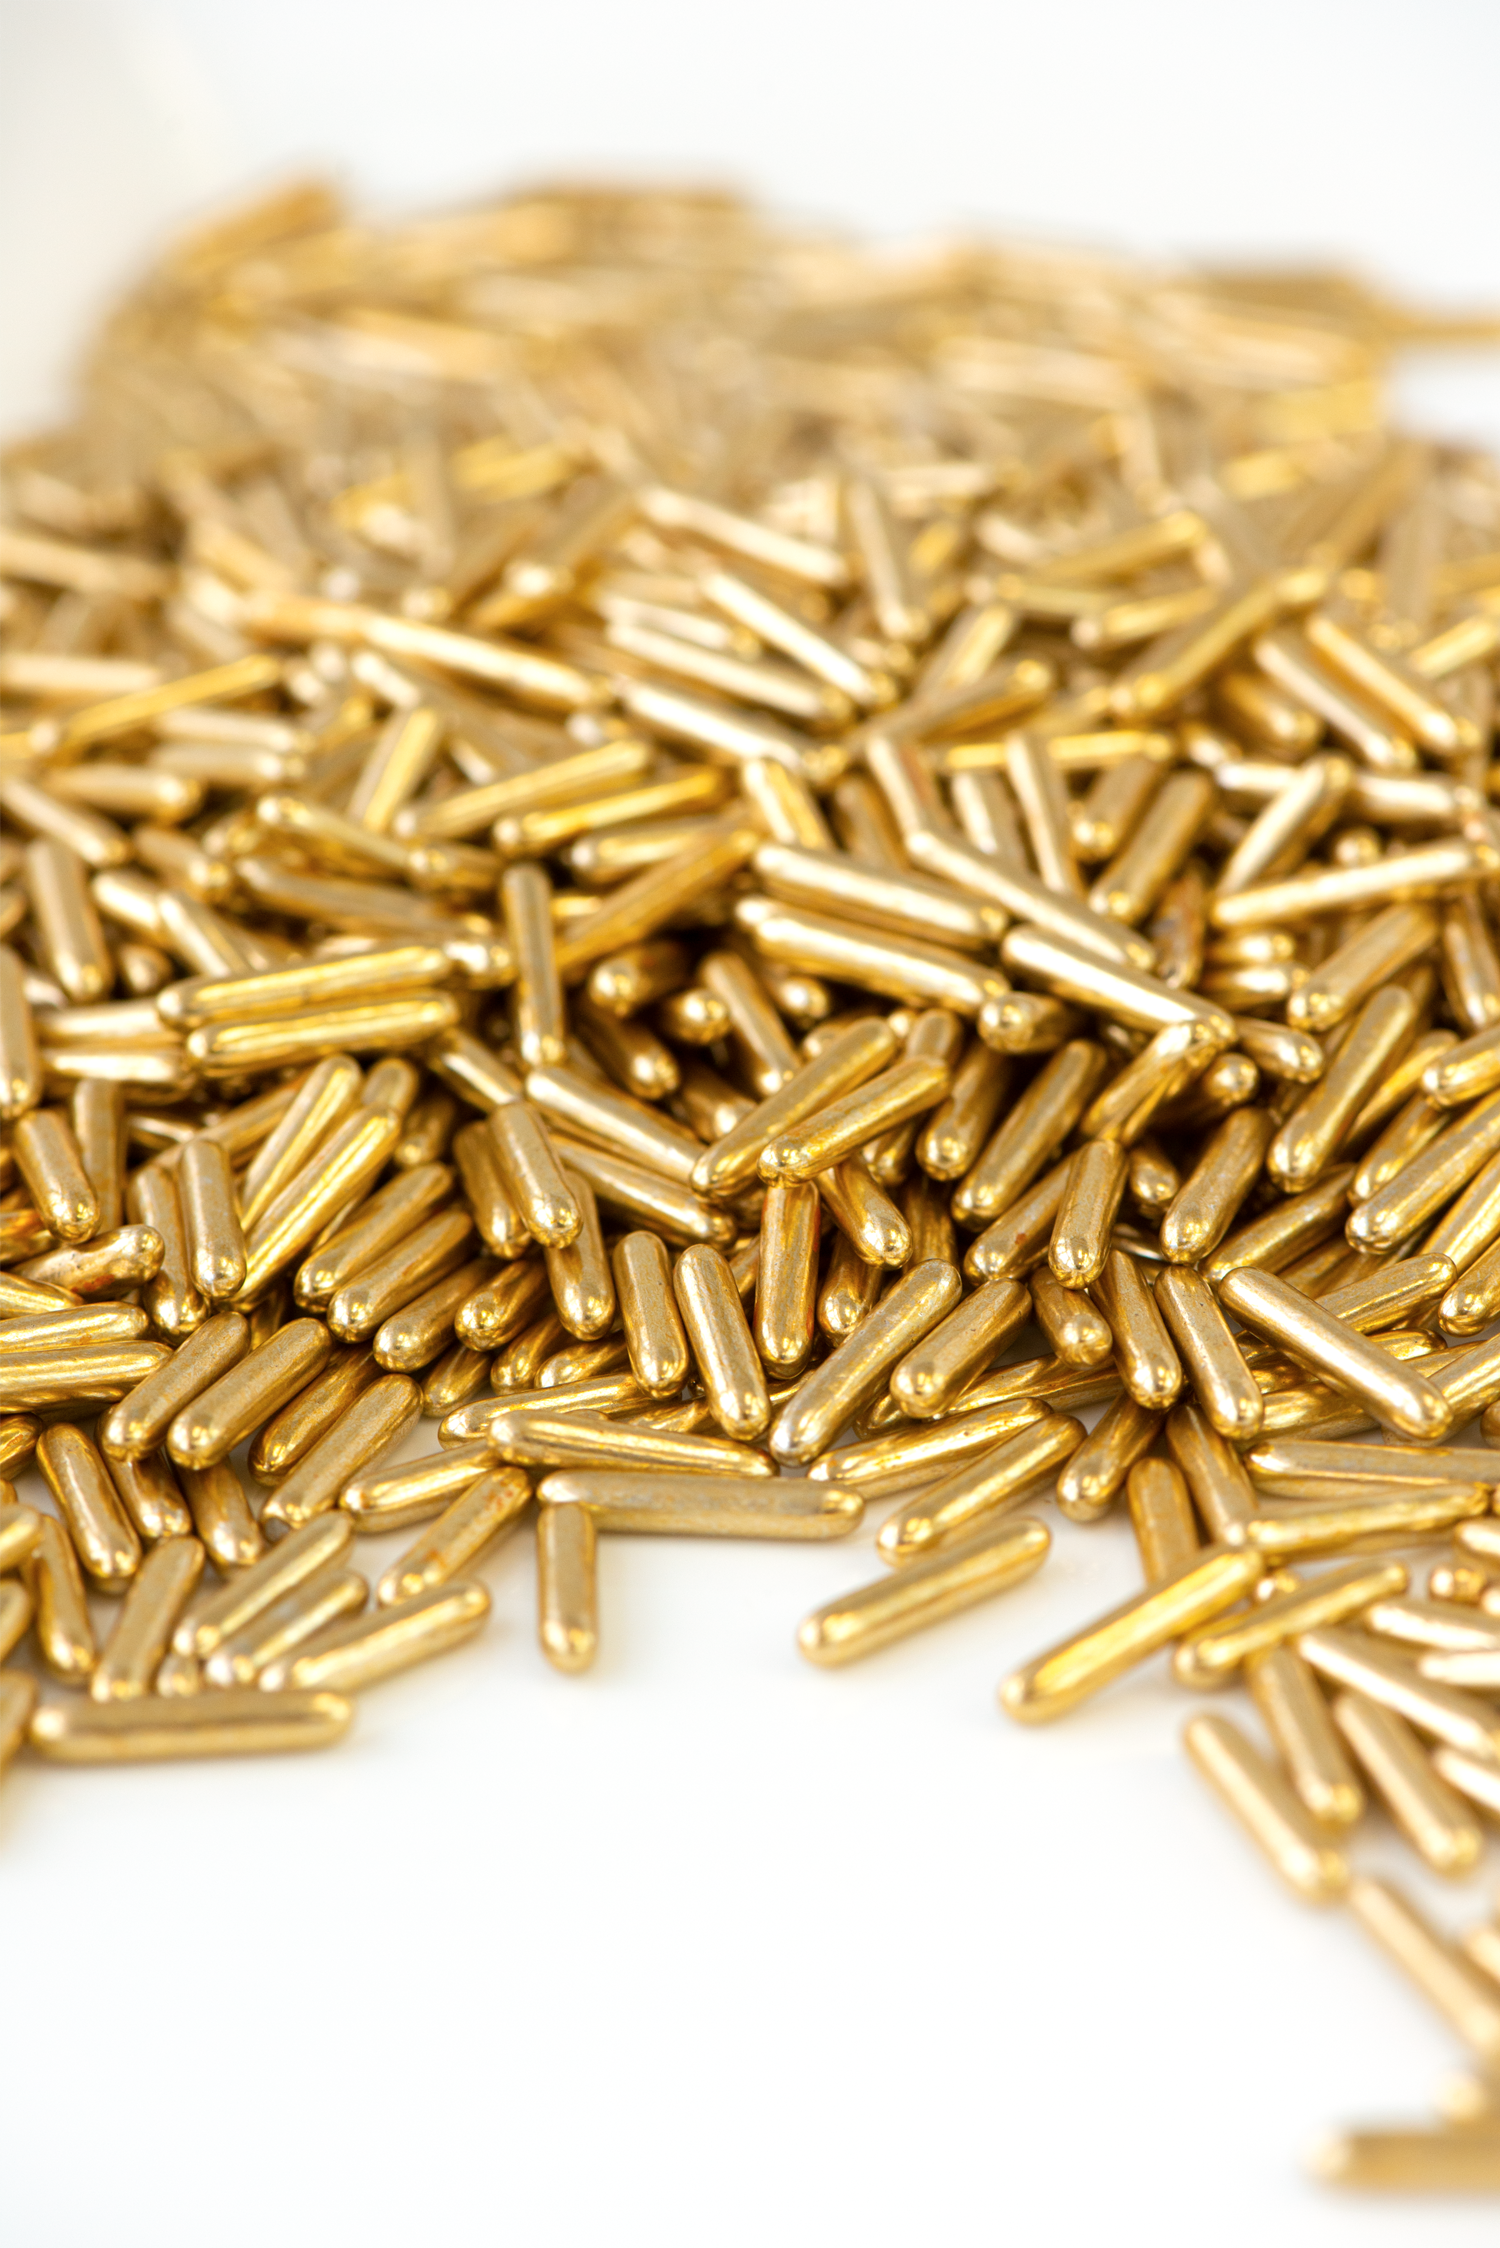 Gold Metallic Rods - US